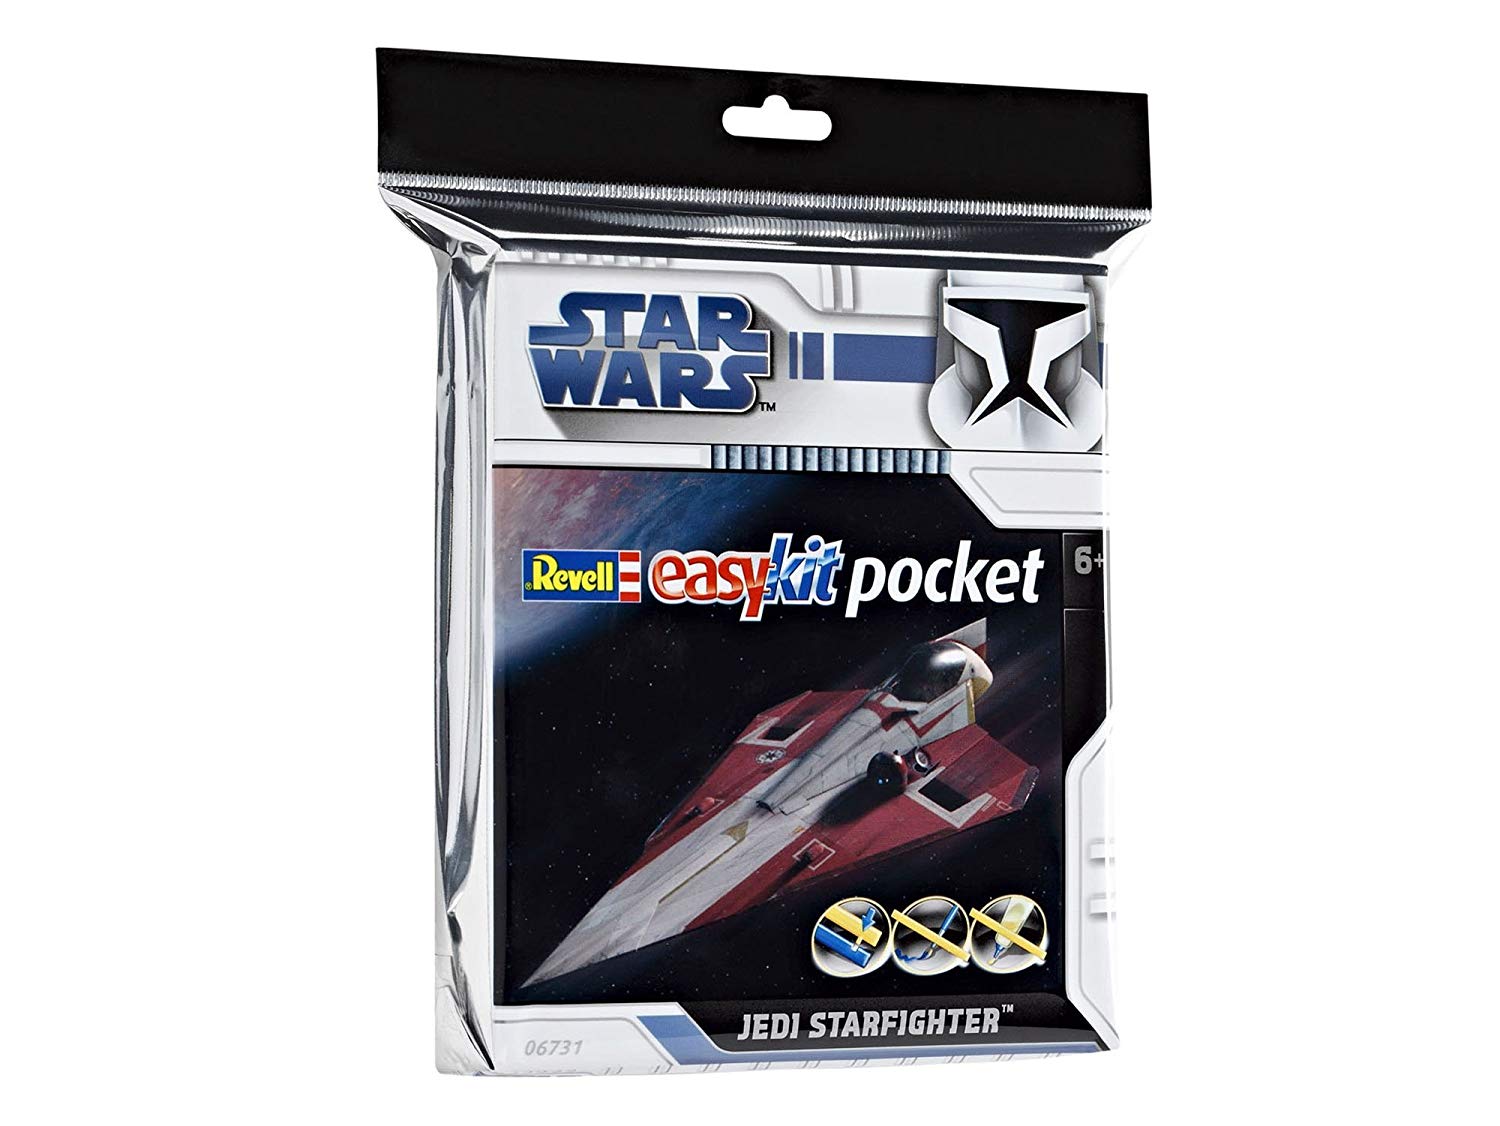 Revell Star Wars Pocket Jedi Starfighter Model Kit